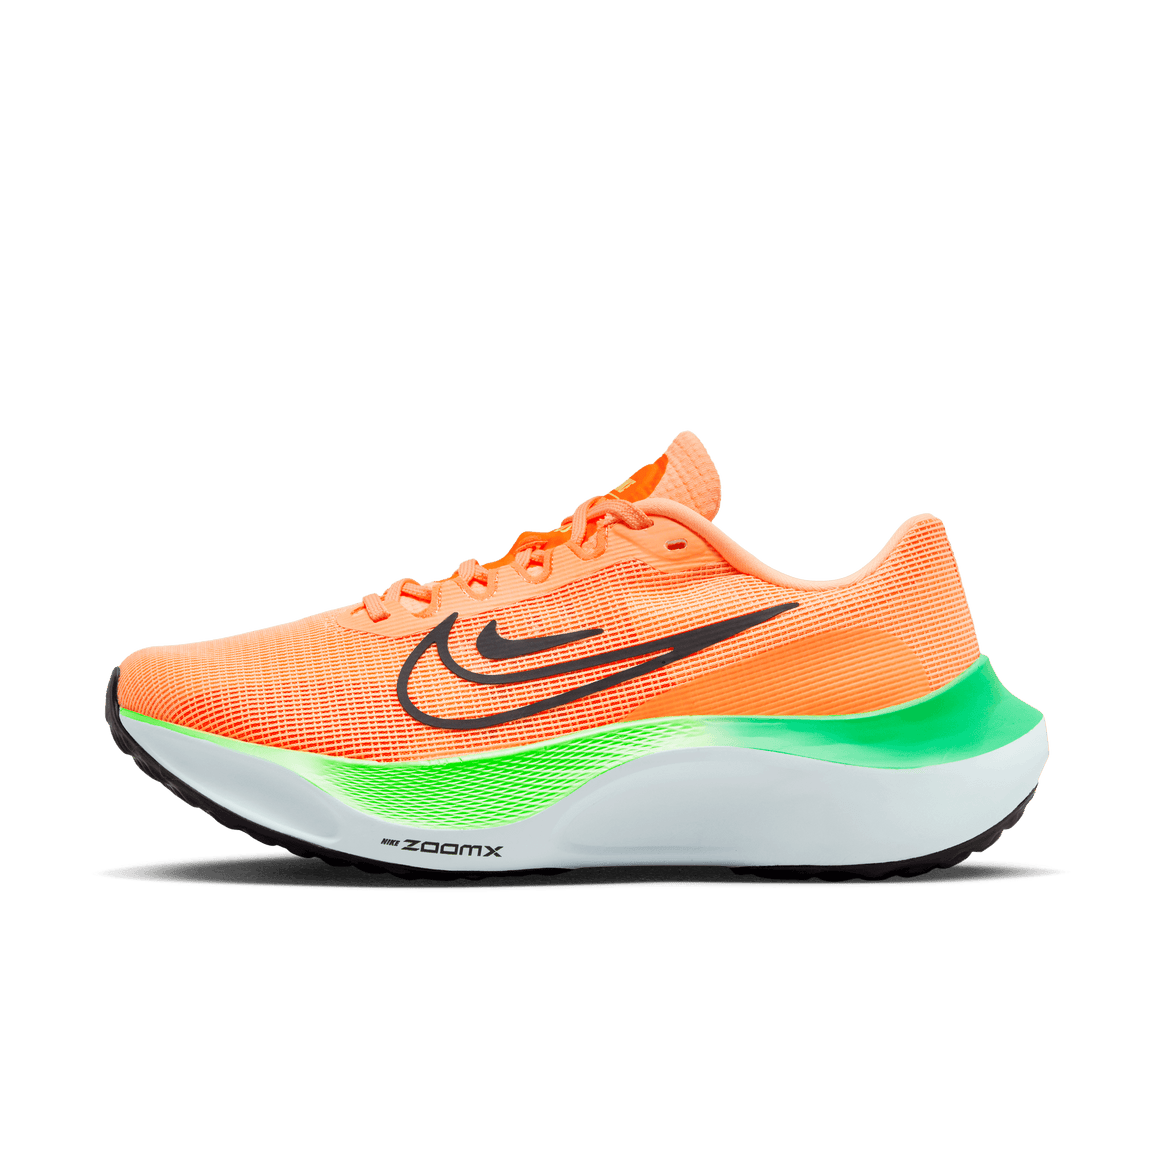 Nike Free 5.0 Volt Neon Orange/black Running Shoes Lace Up Women's Size 6